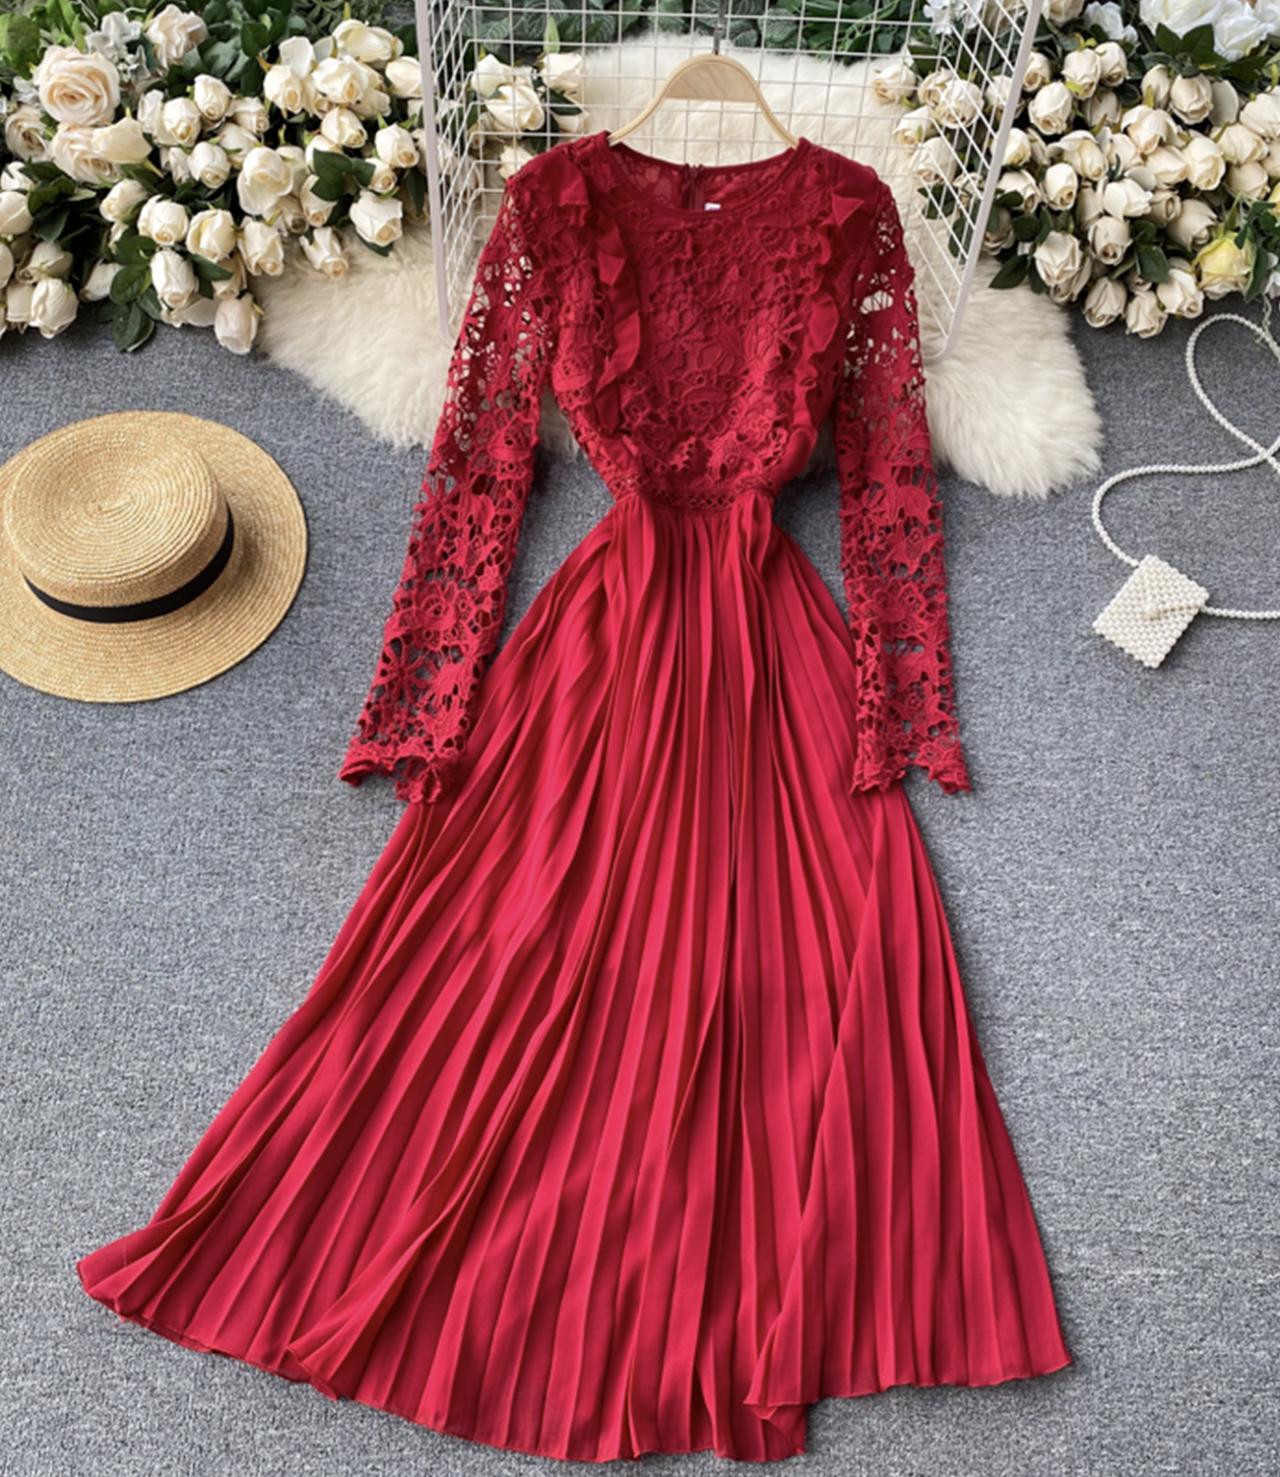 Stylish long sleeve lace dress